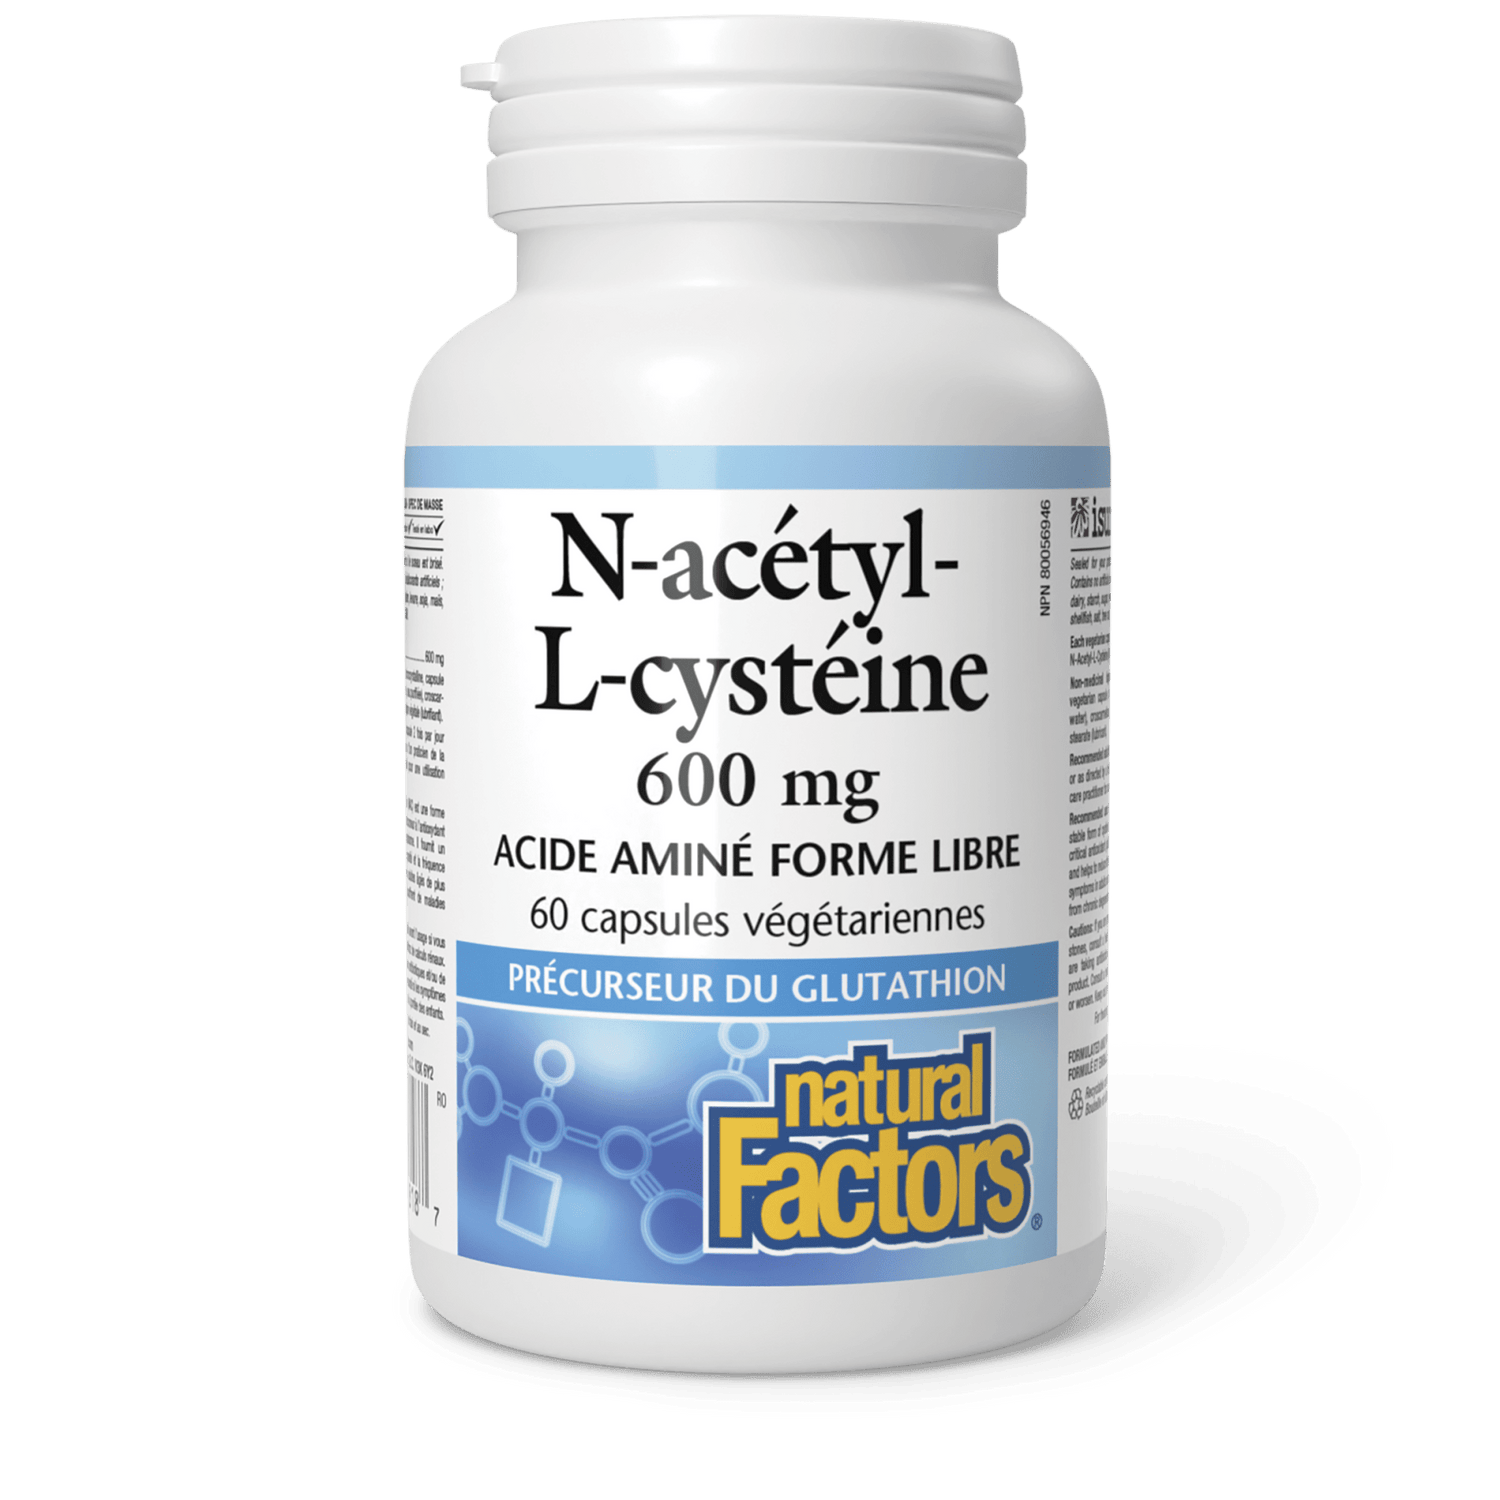 N-acétyl-L-cystéine 600 mg, Natural Factors|v|image|2818